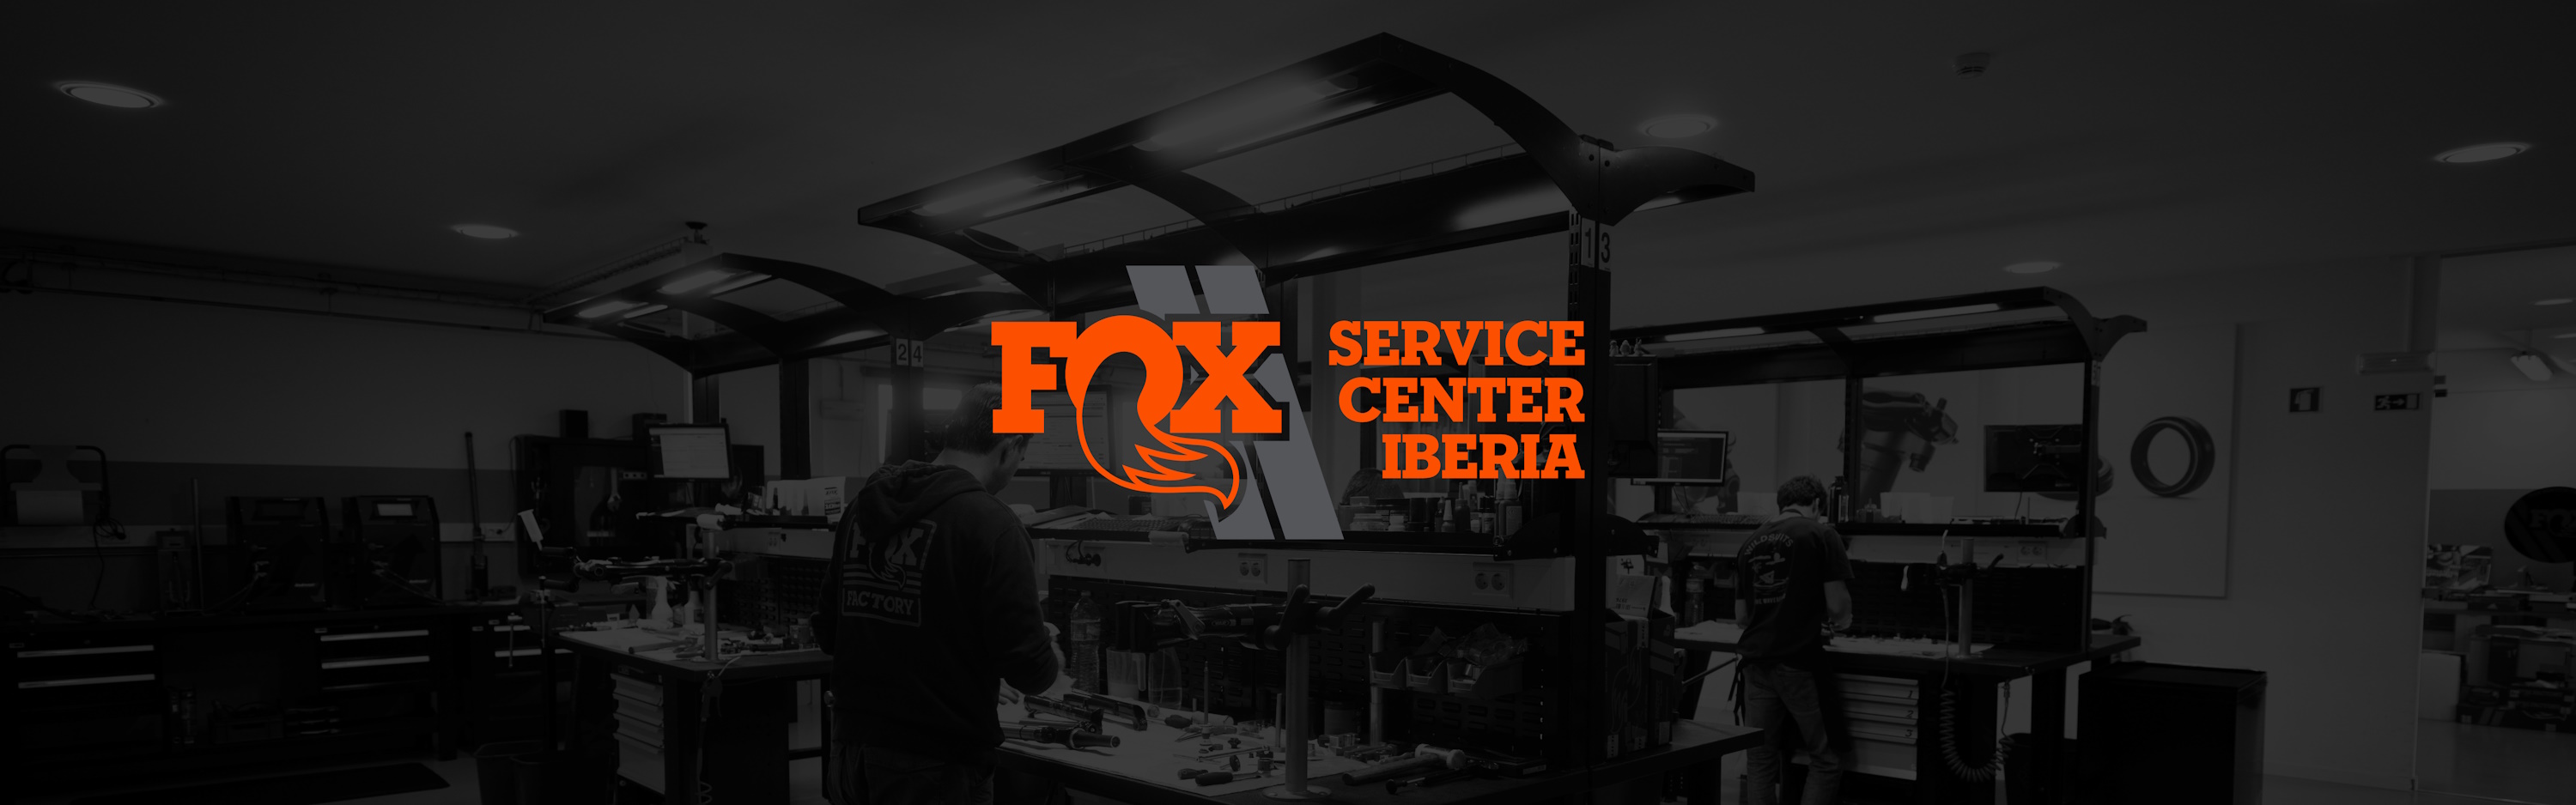 Fox-Banner